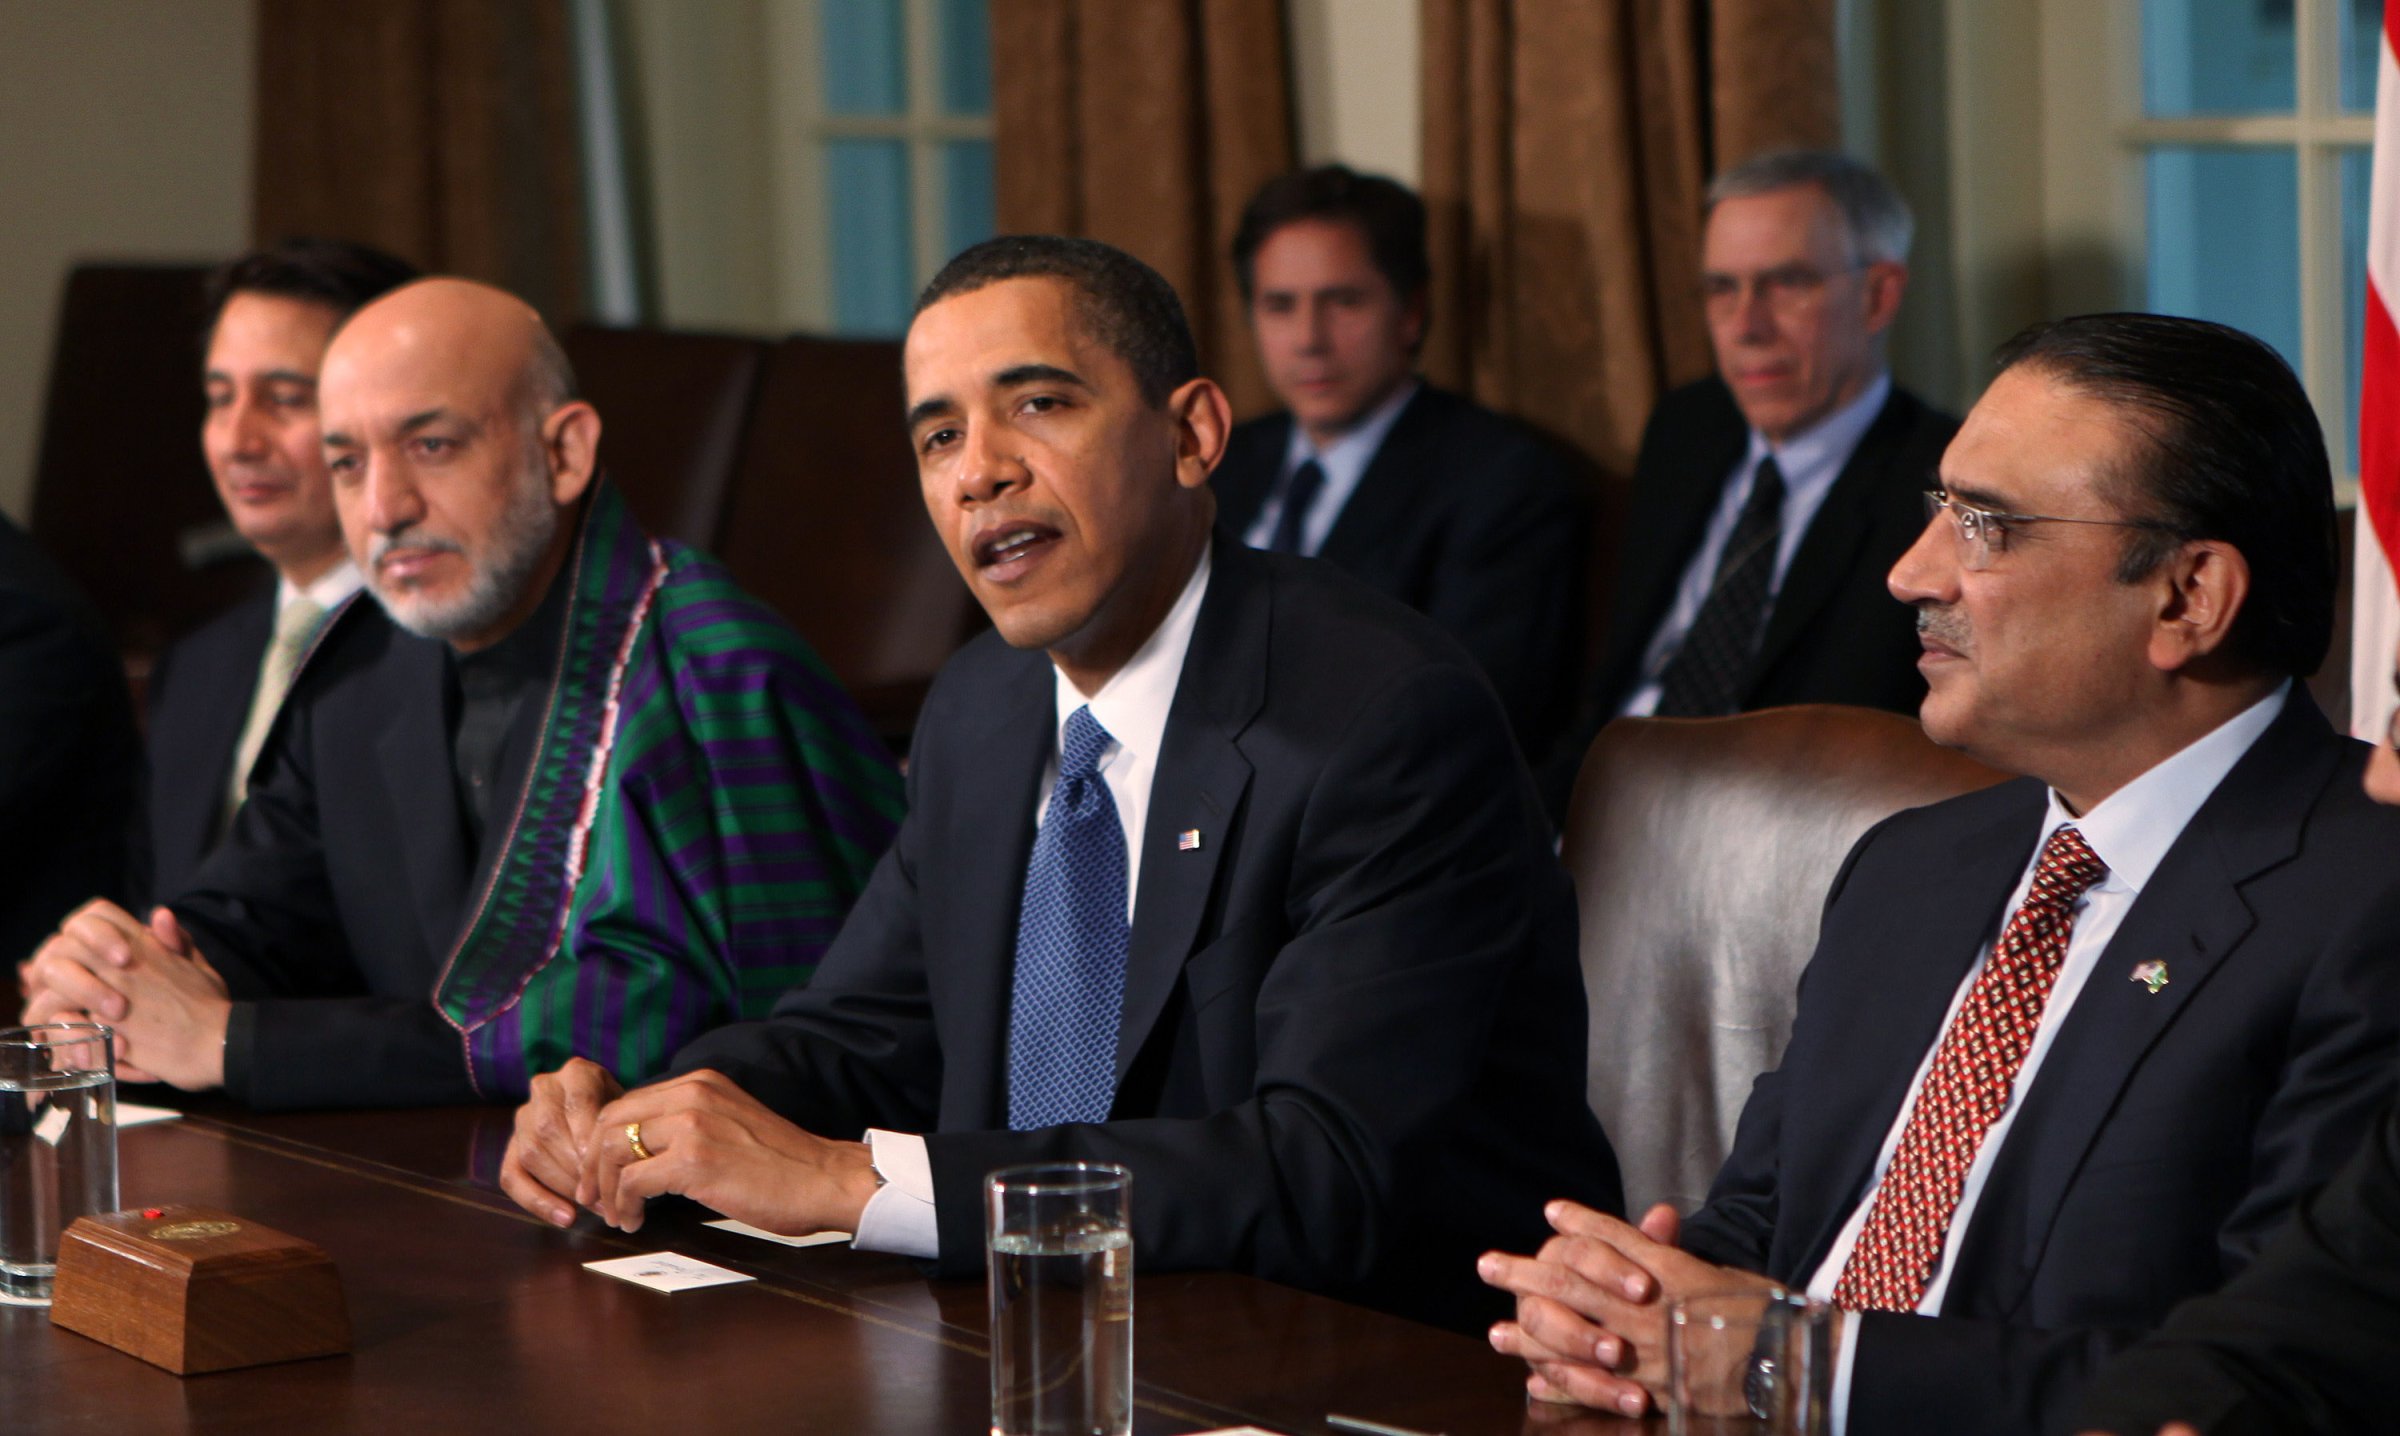 Obama,Karzai And Zardari Brief Media After White House Meetings